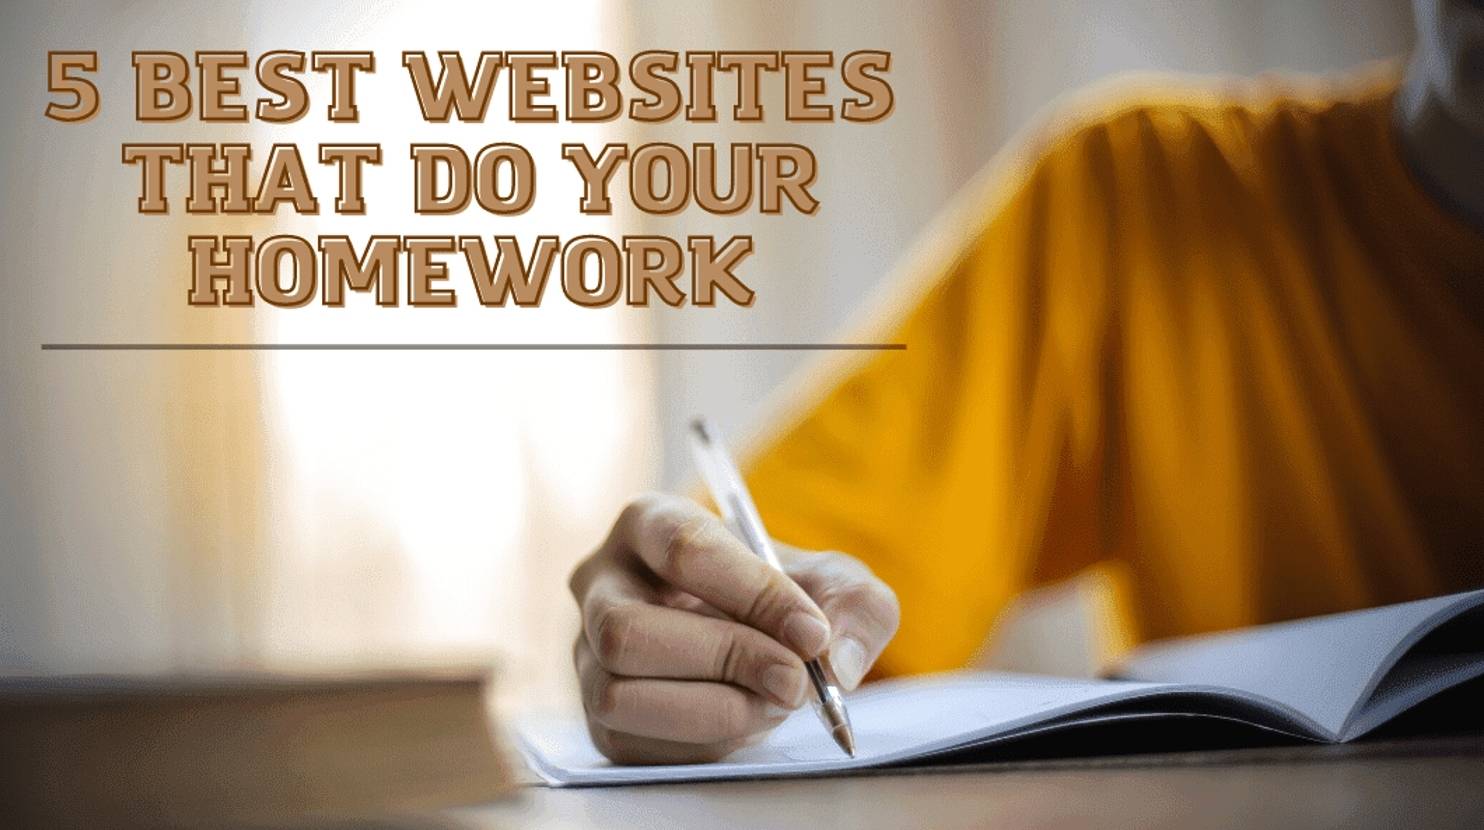 homework websites